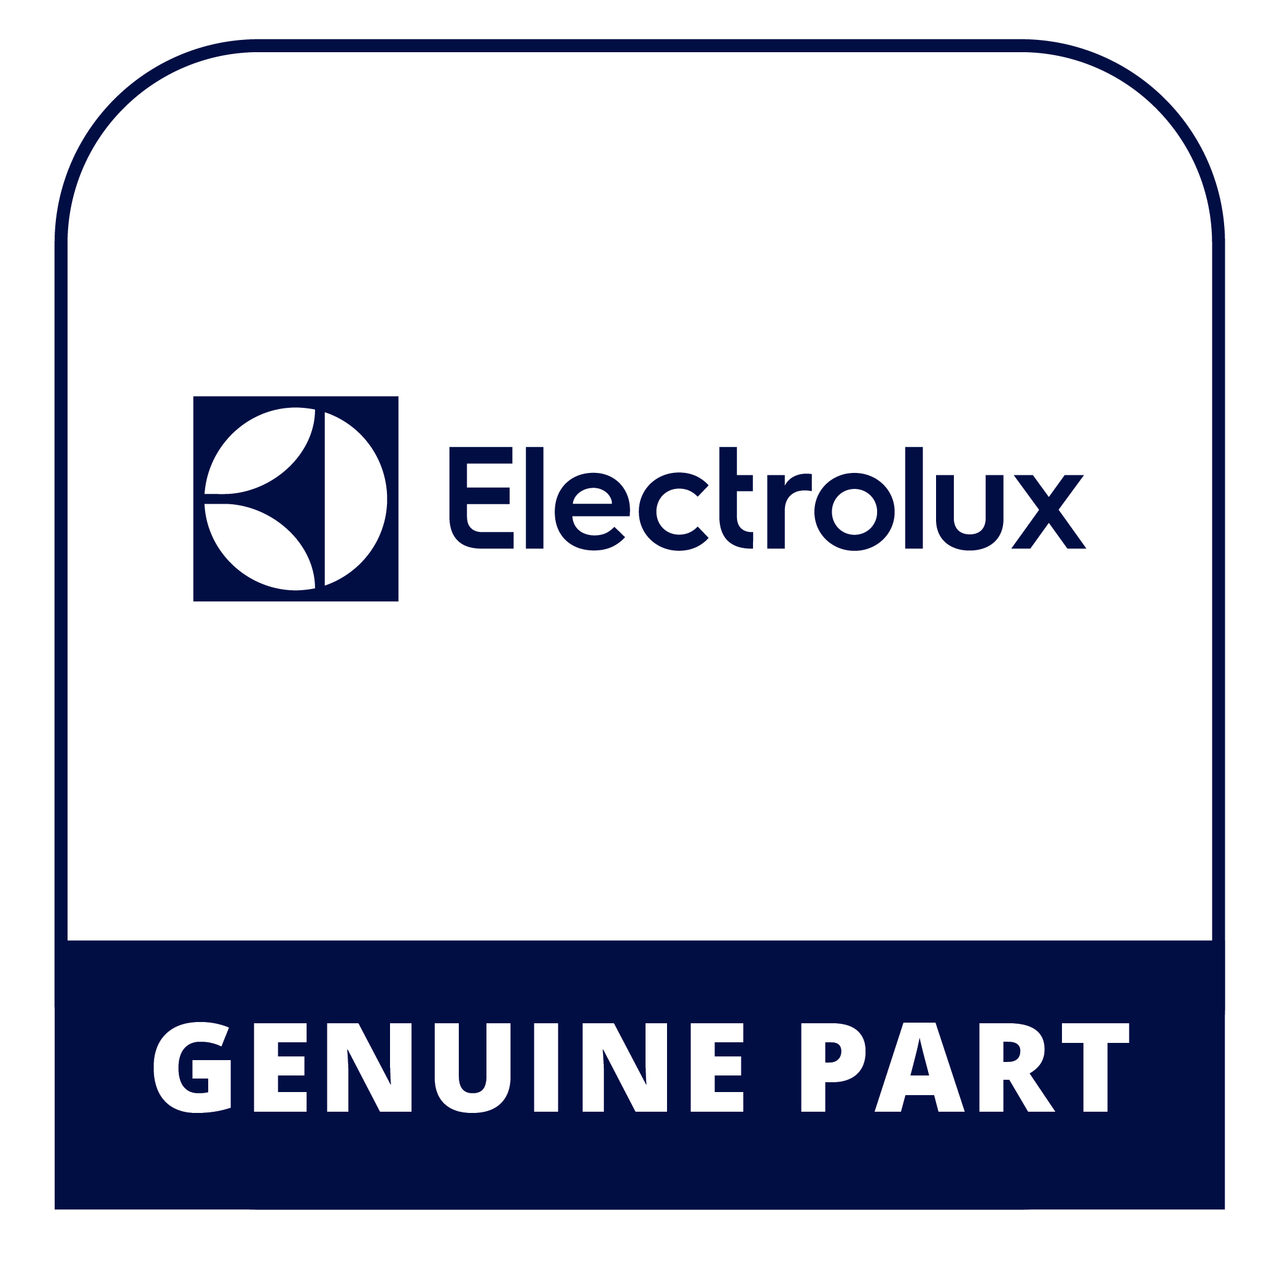 Frigidaire - Electrolux 139020100 Bracket - Genuine Electrolux Part